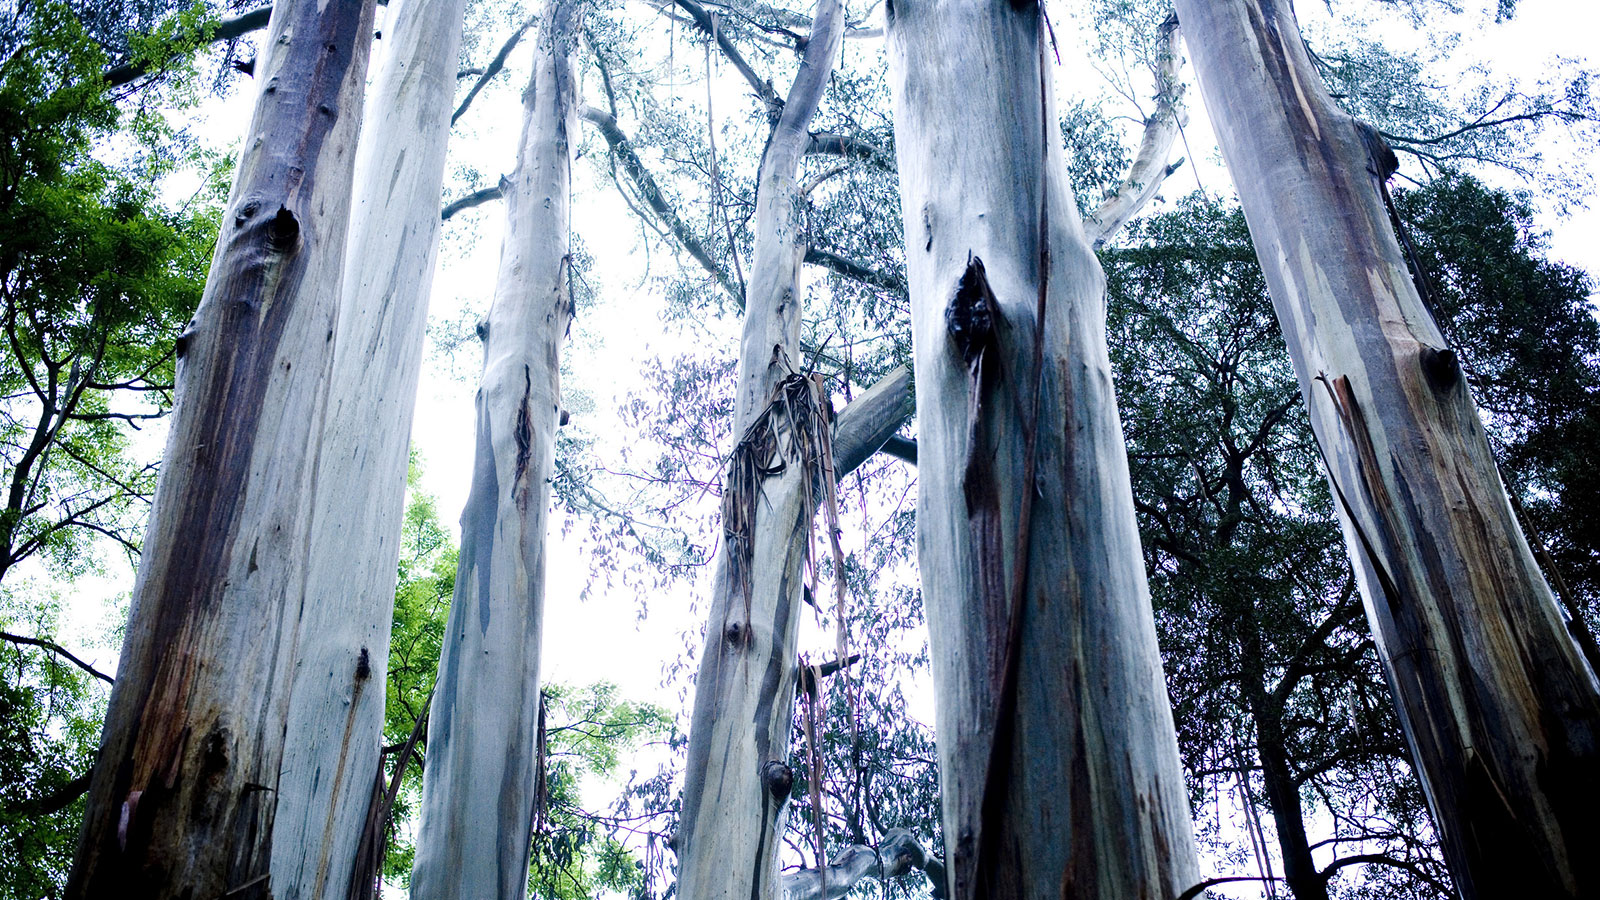 Alfred Nicholas Gardens, Yarra Valley and Dandenong Ranges, Victoria, Australia